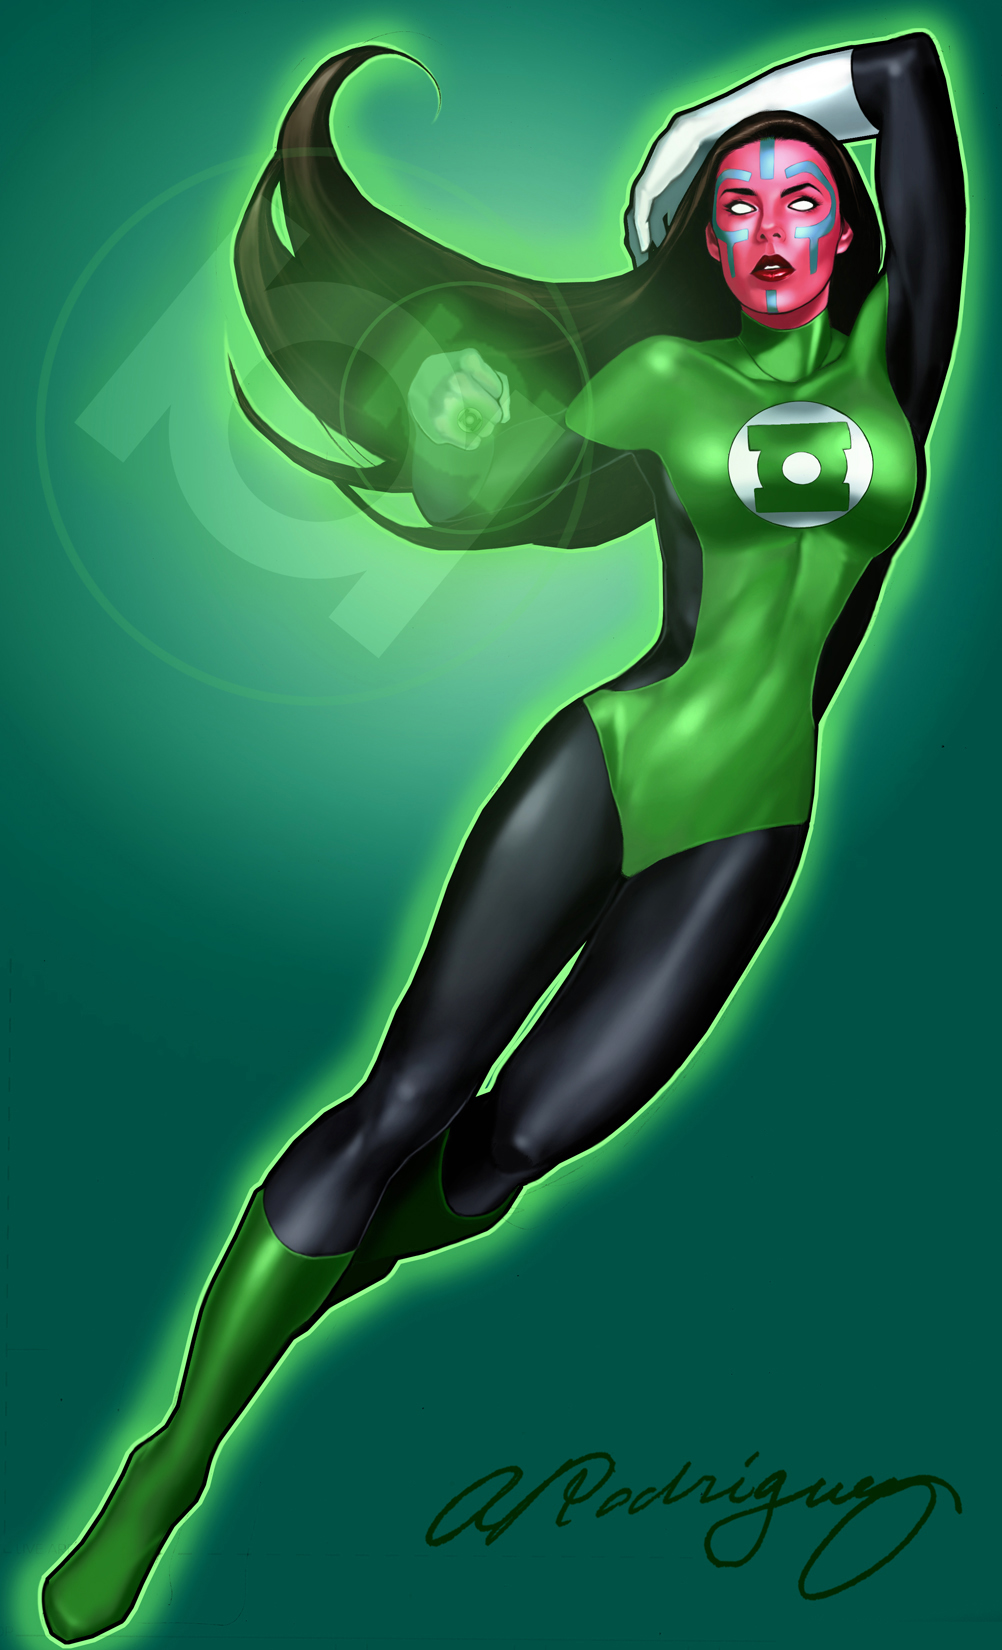 Green_Lantern_Iolande_by_aleciarodriguez.jpg